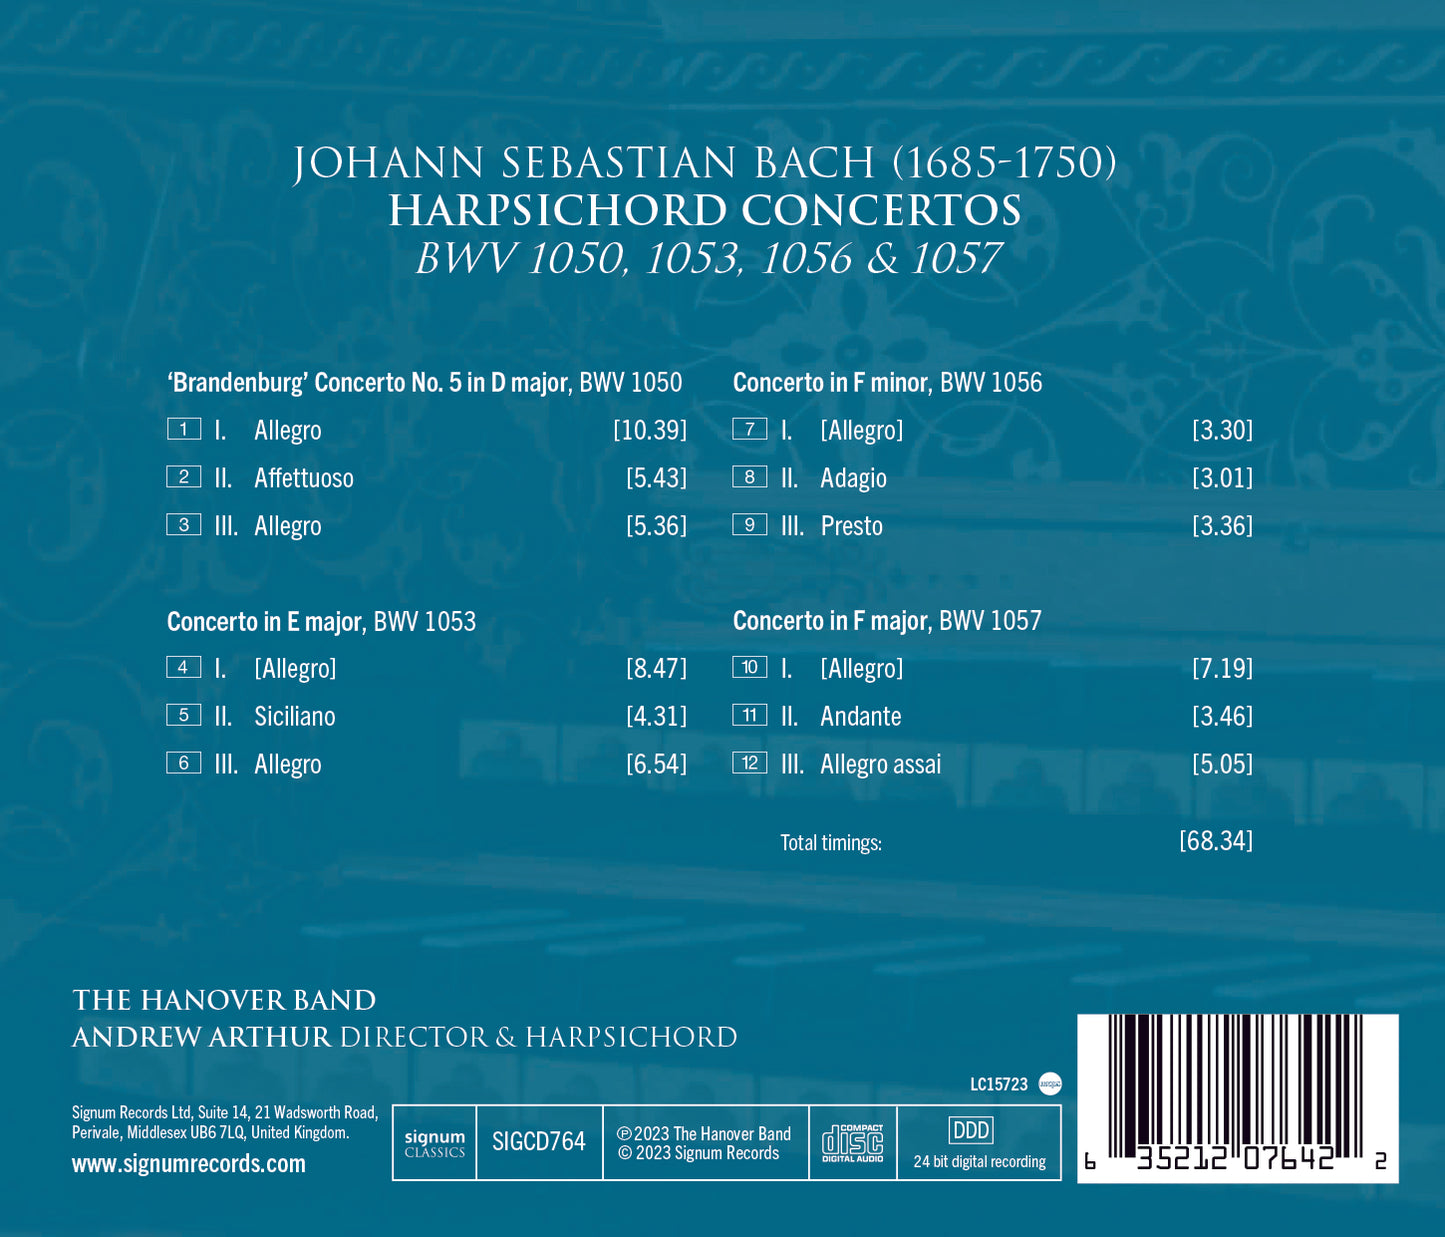 J.S. Bach: Harpsichord Concertos, BWV 1050, 1053, 1056 & 1057